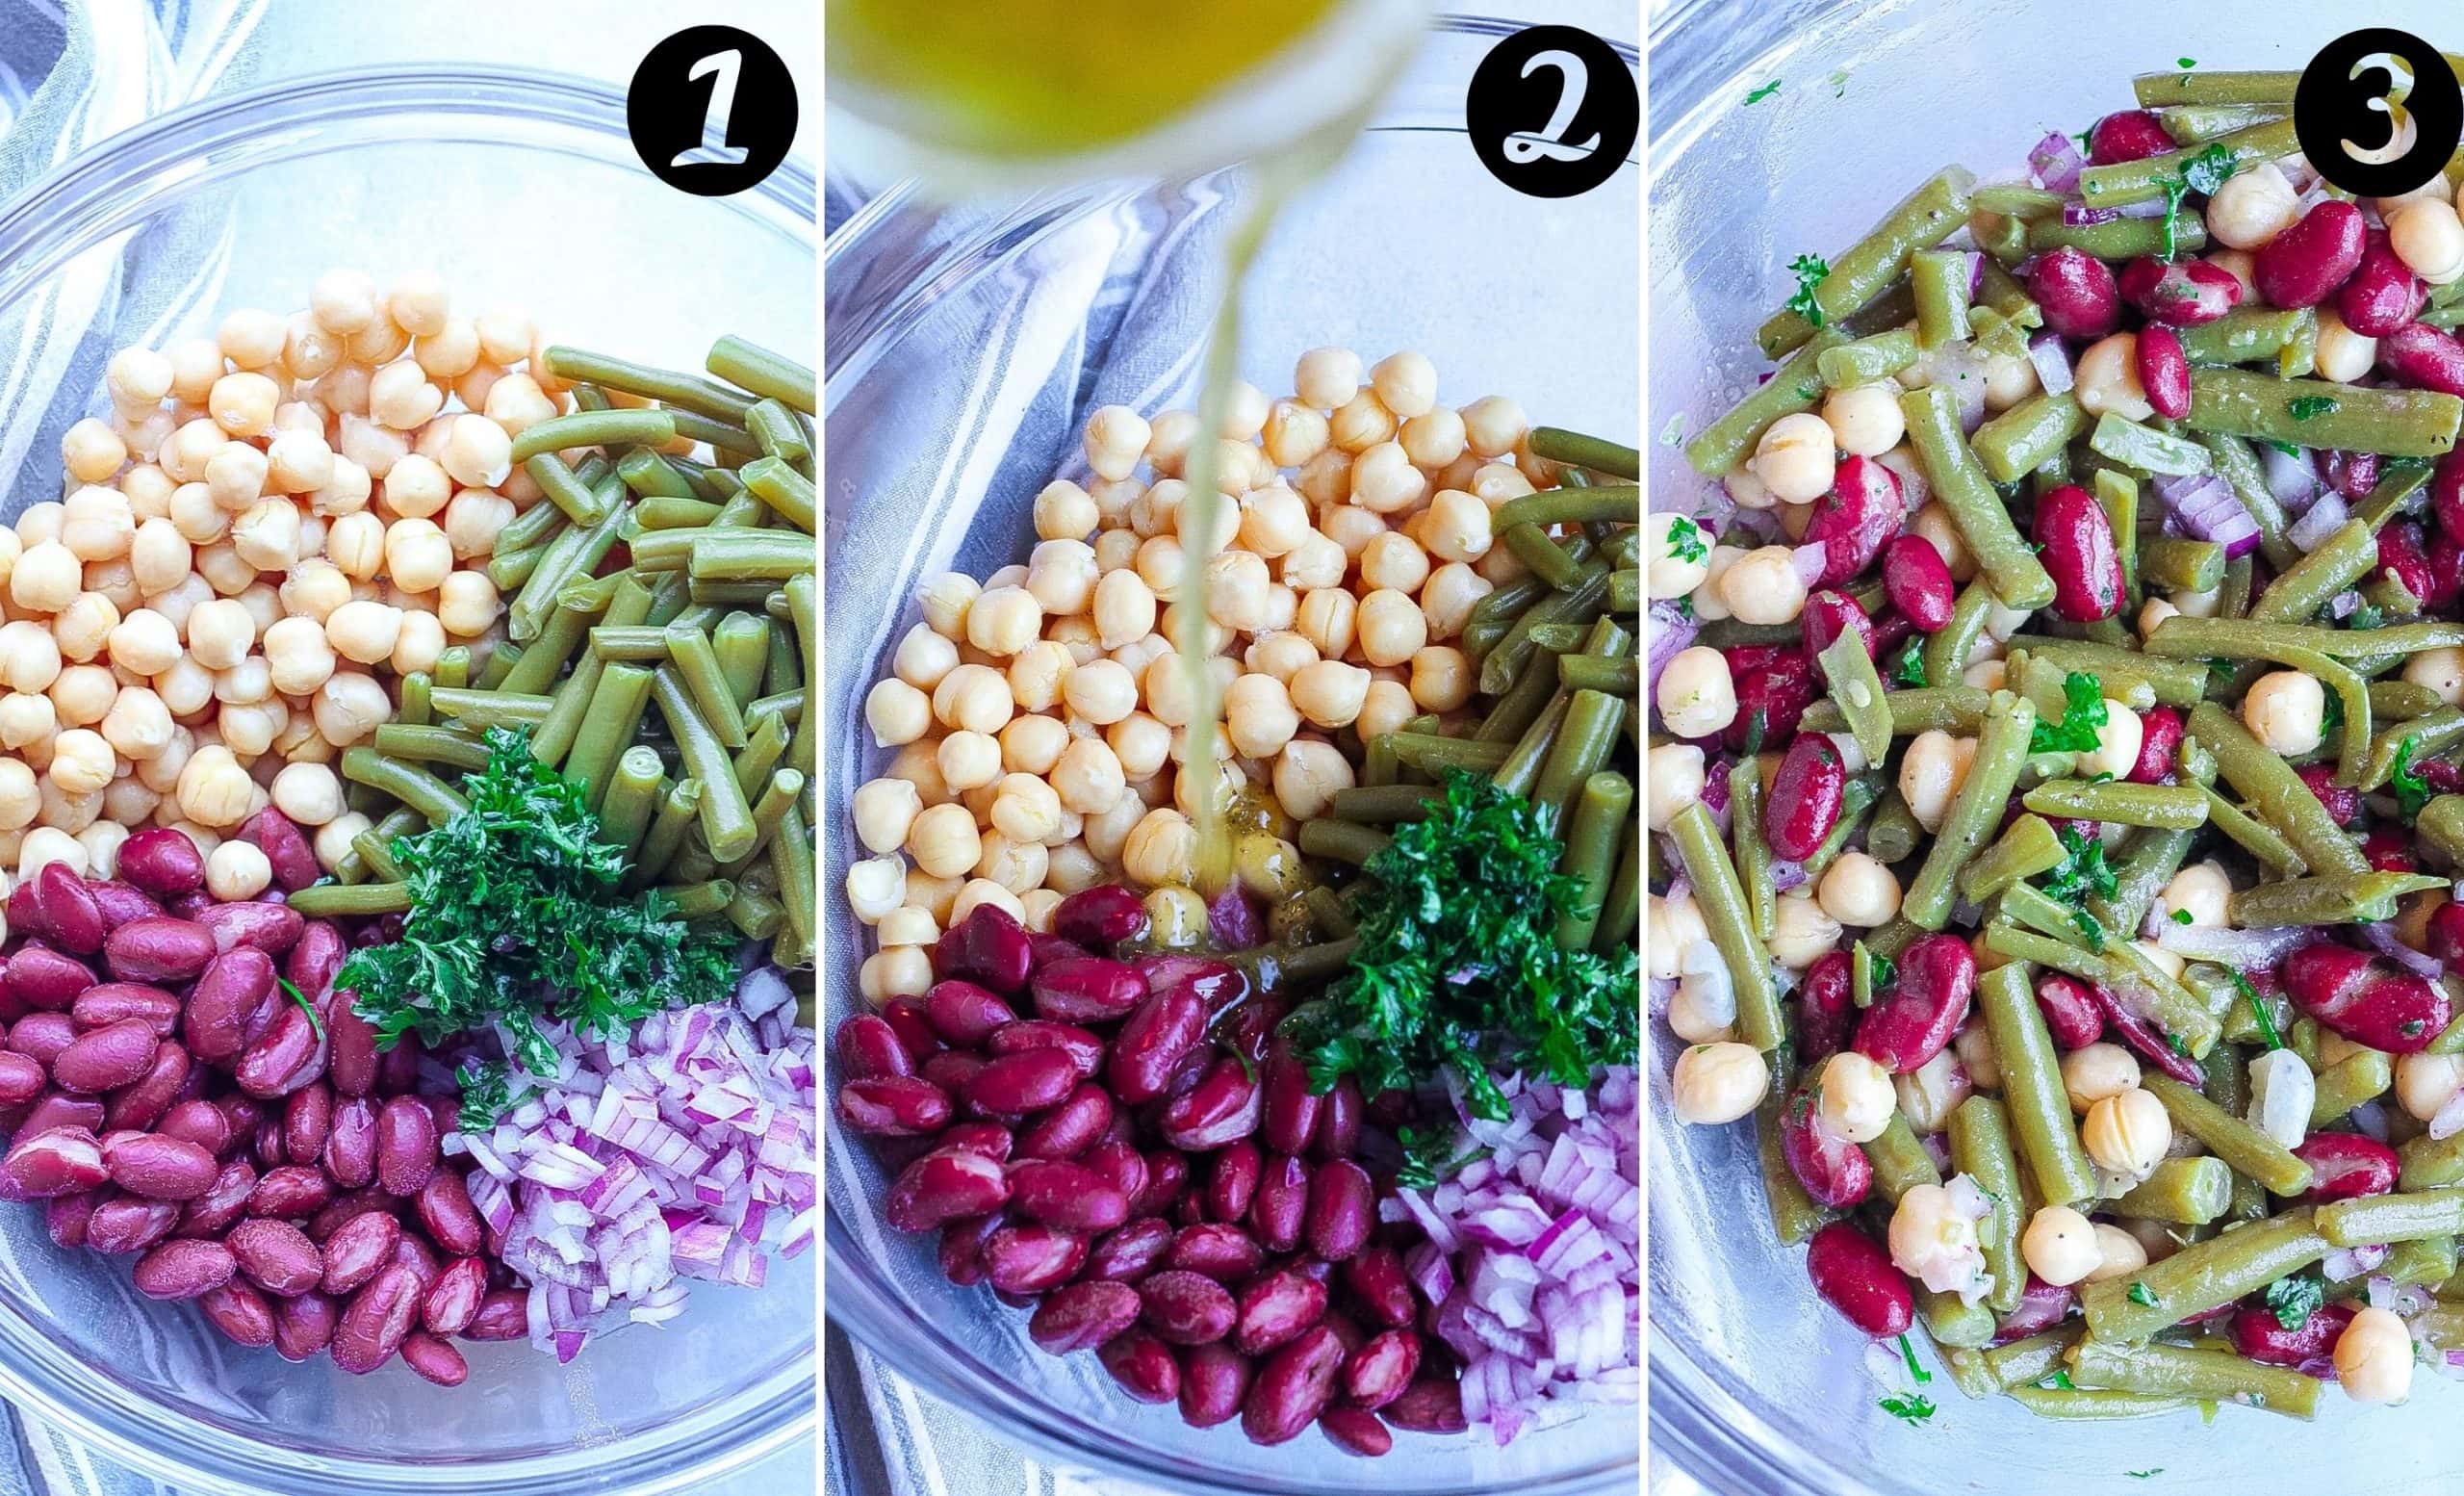 Classic Three Bean Salad Recipe steps